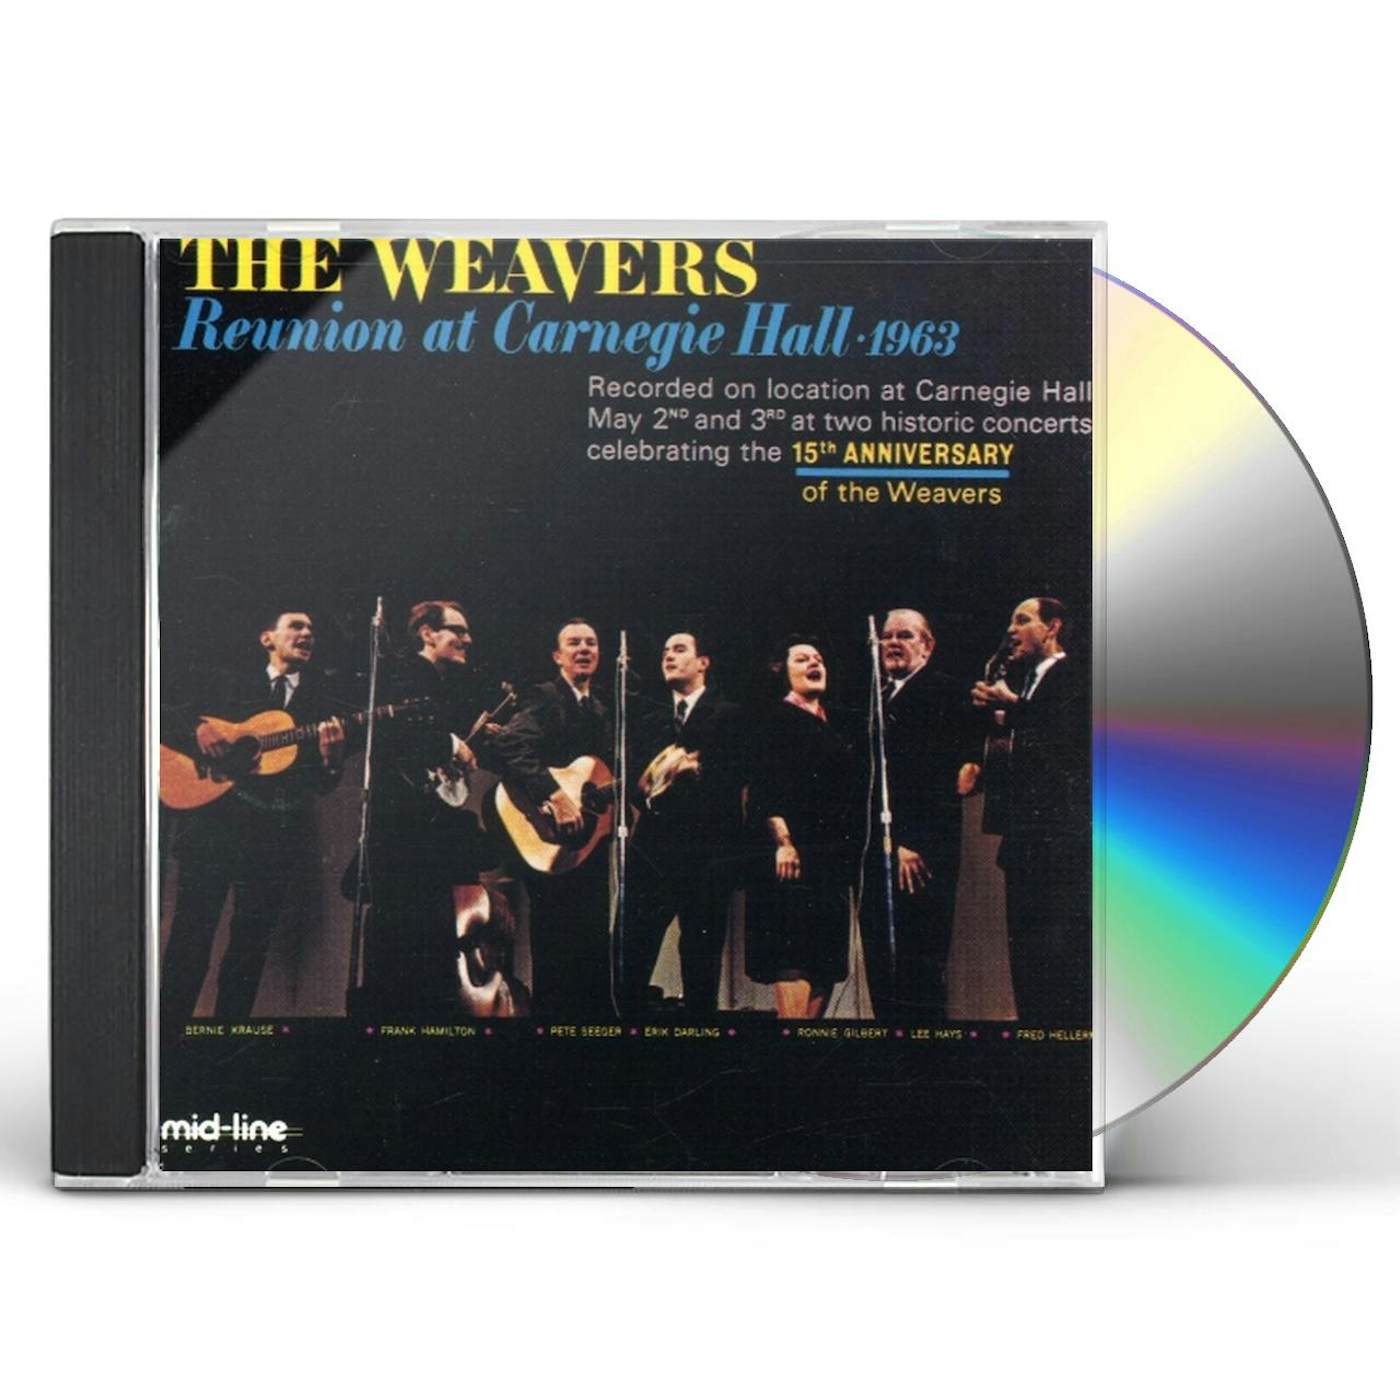 Weavers REUNION AT CARNEGIE HALL 1963 1 CD